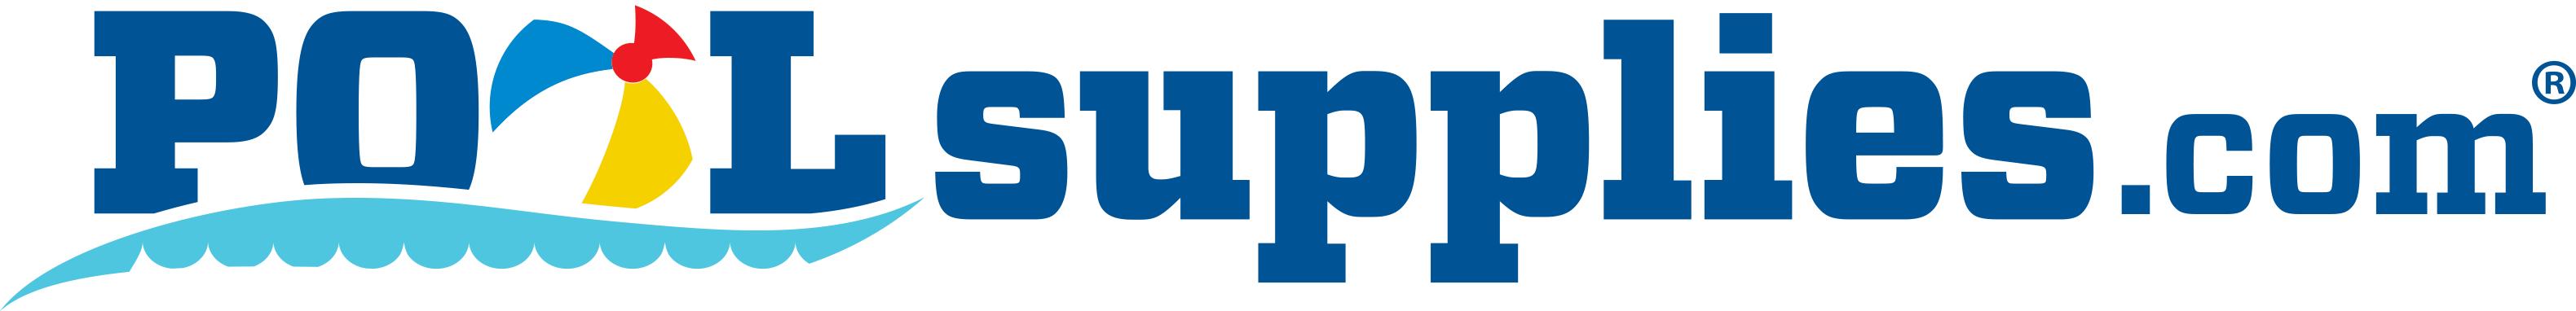 PoolSupplies.com Logo